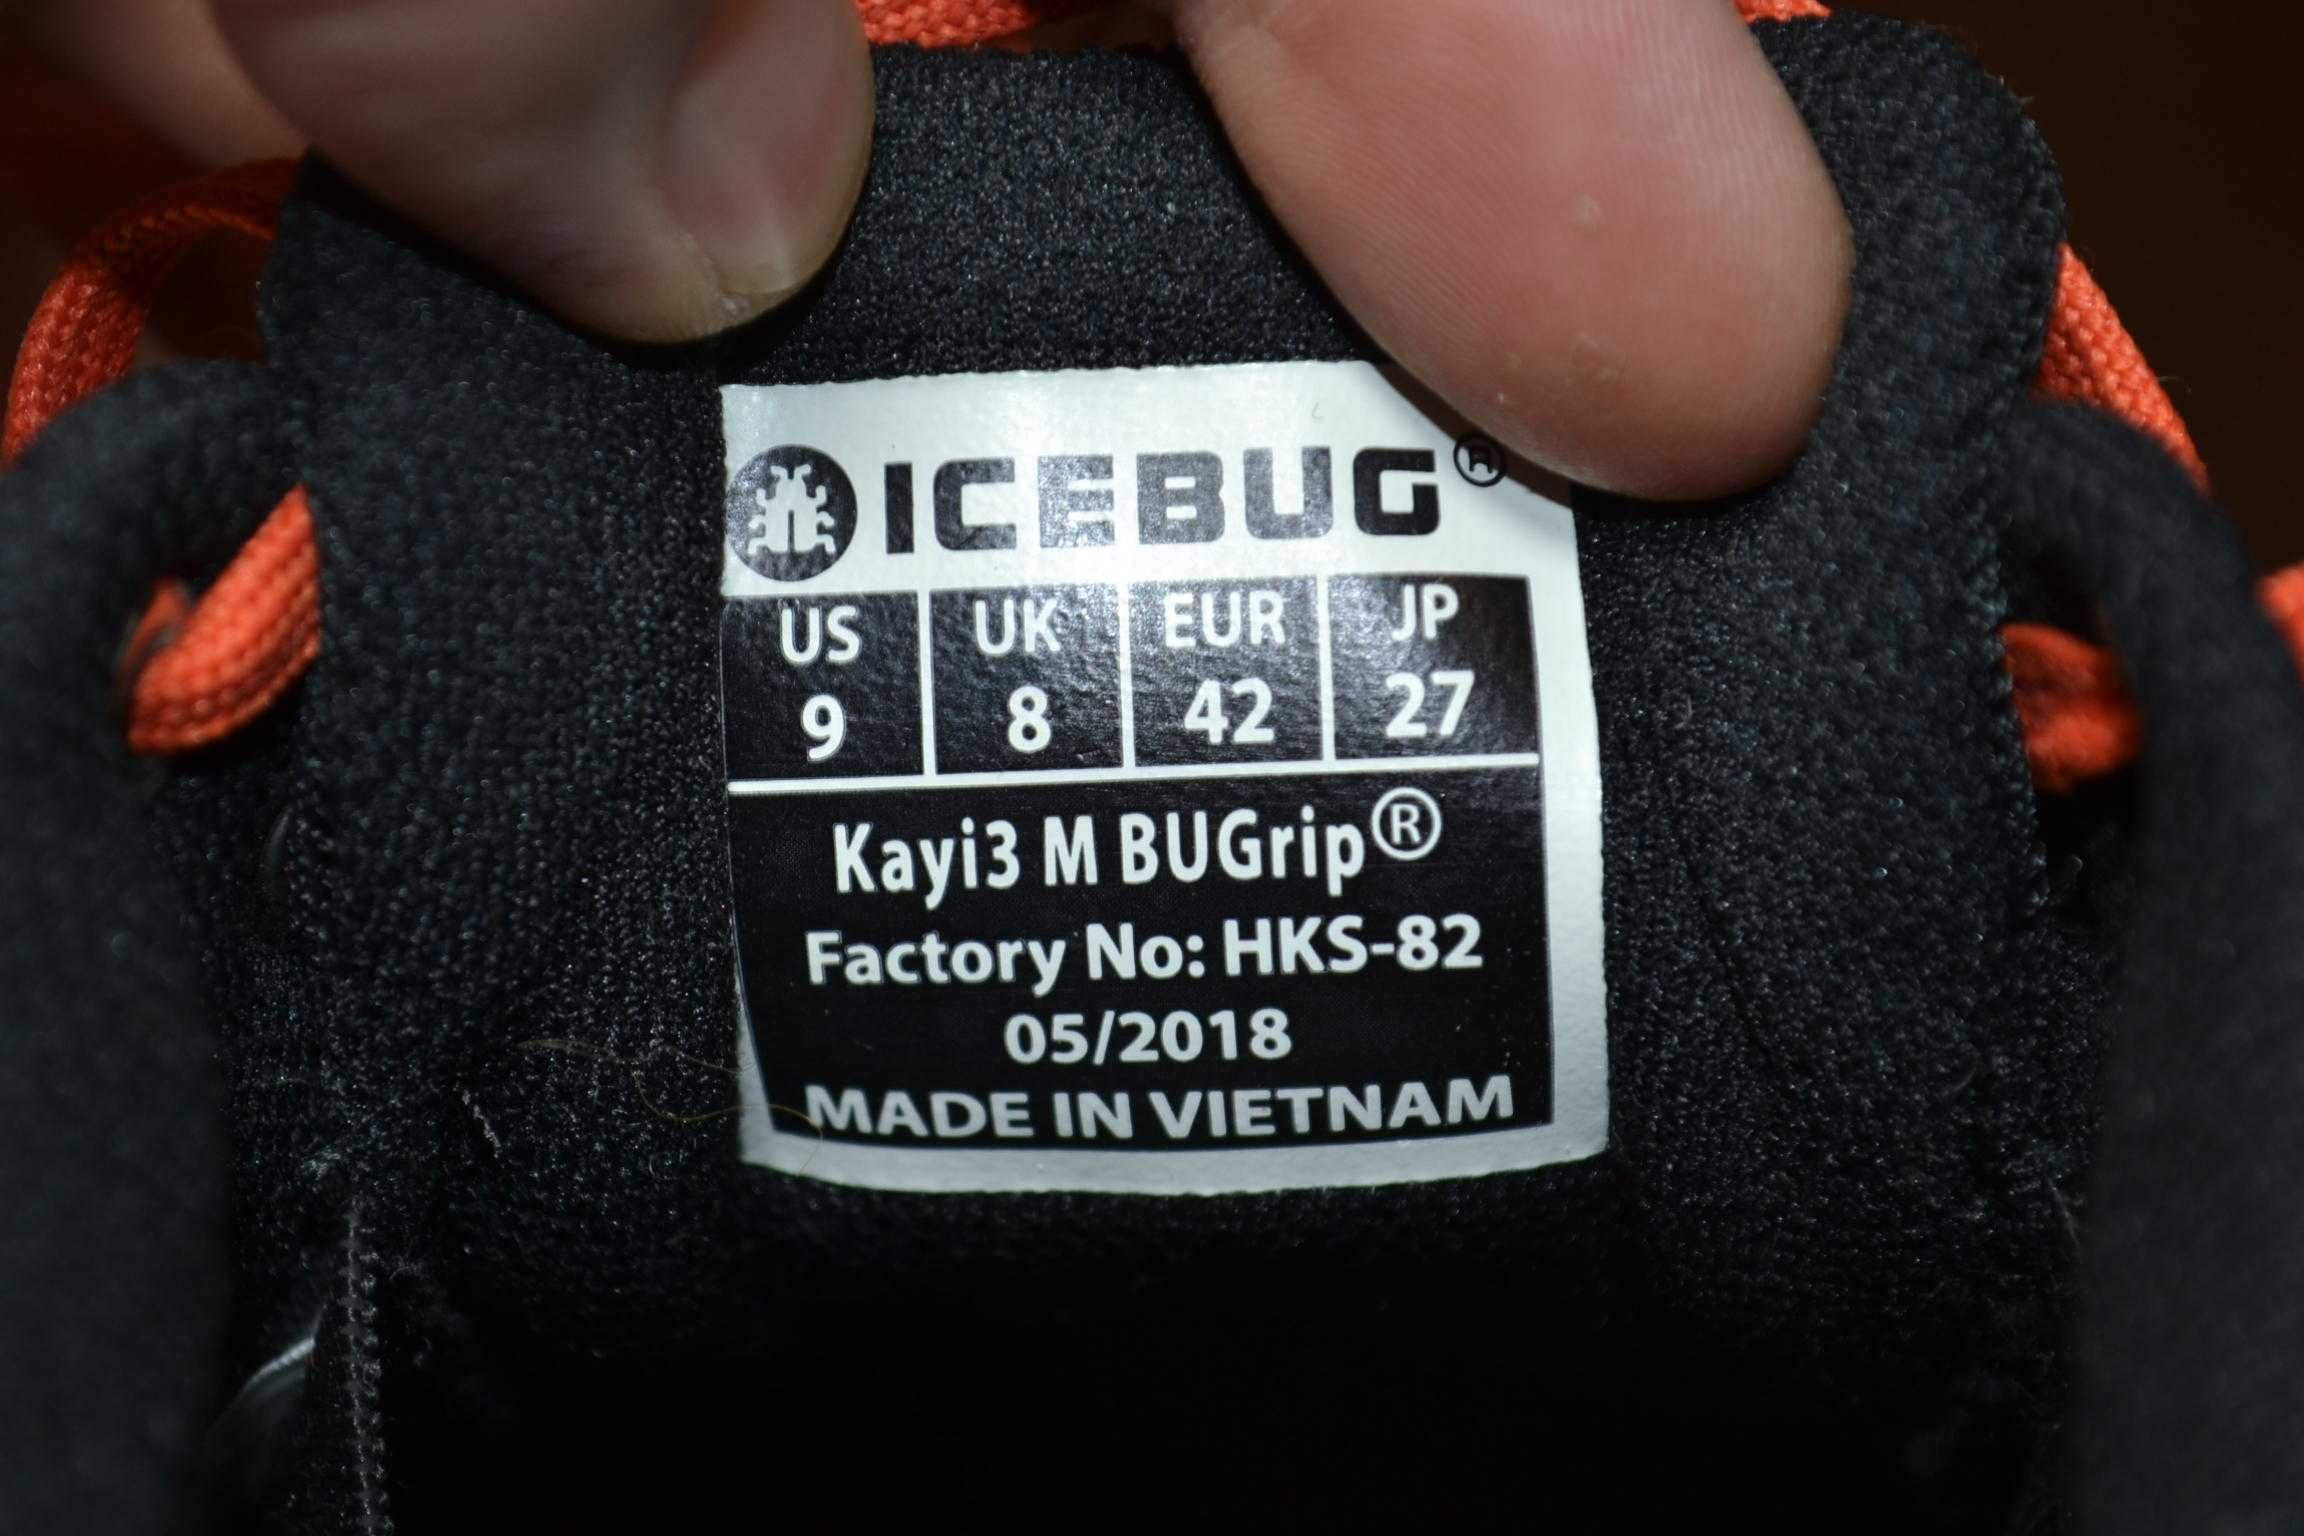 icebug kayi3 m bugrip 41-42р кроссовки с шипами оригинал трекинг